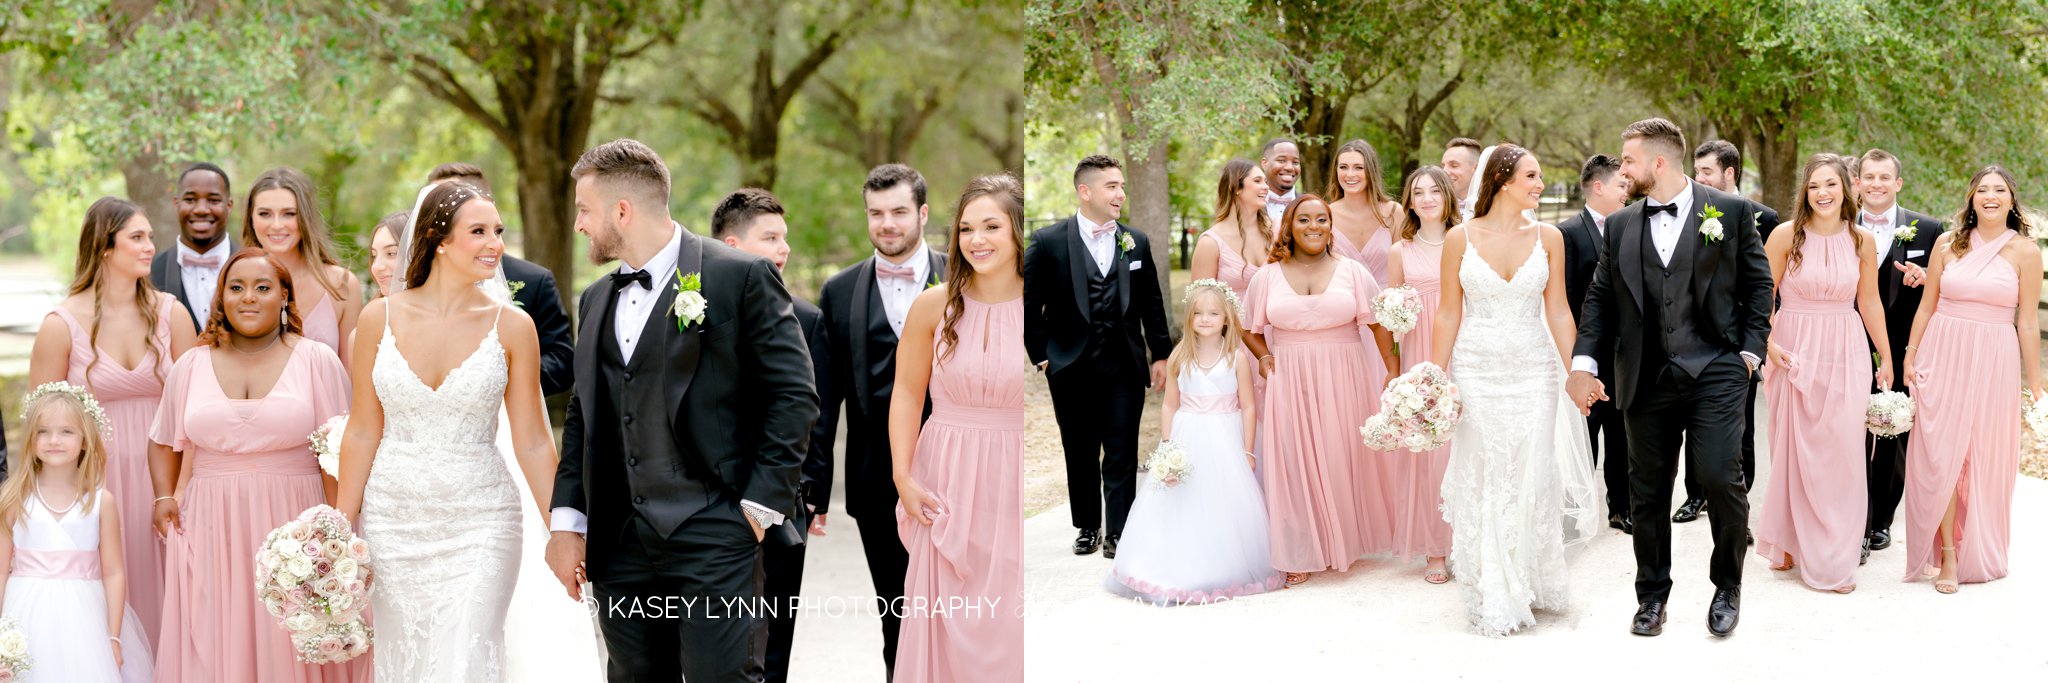 houston wedding photographer / Kasey Lynn Photography